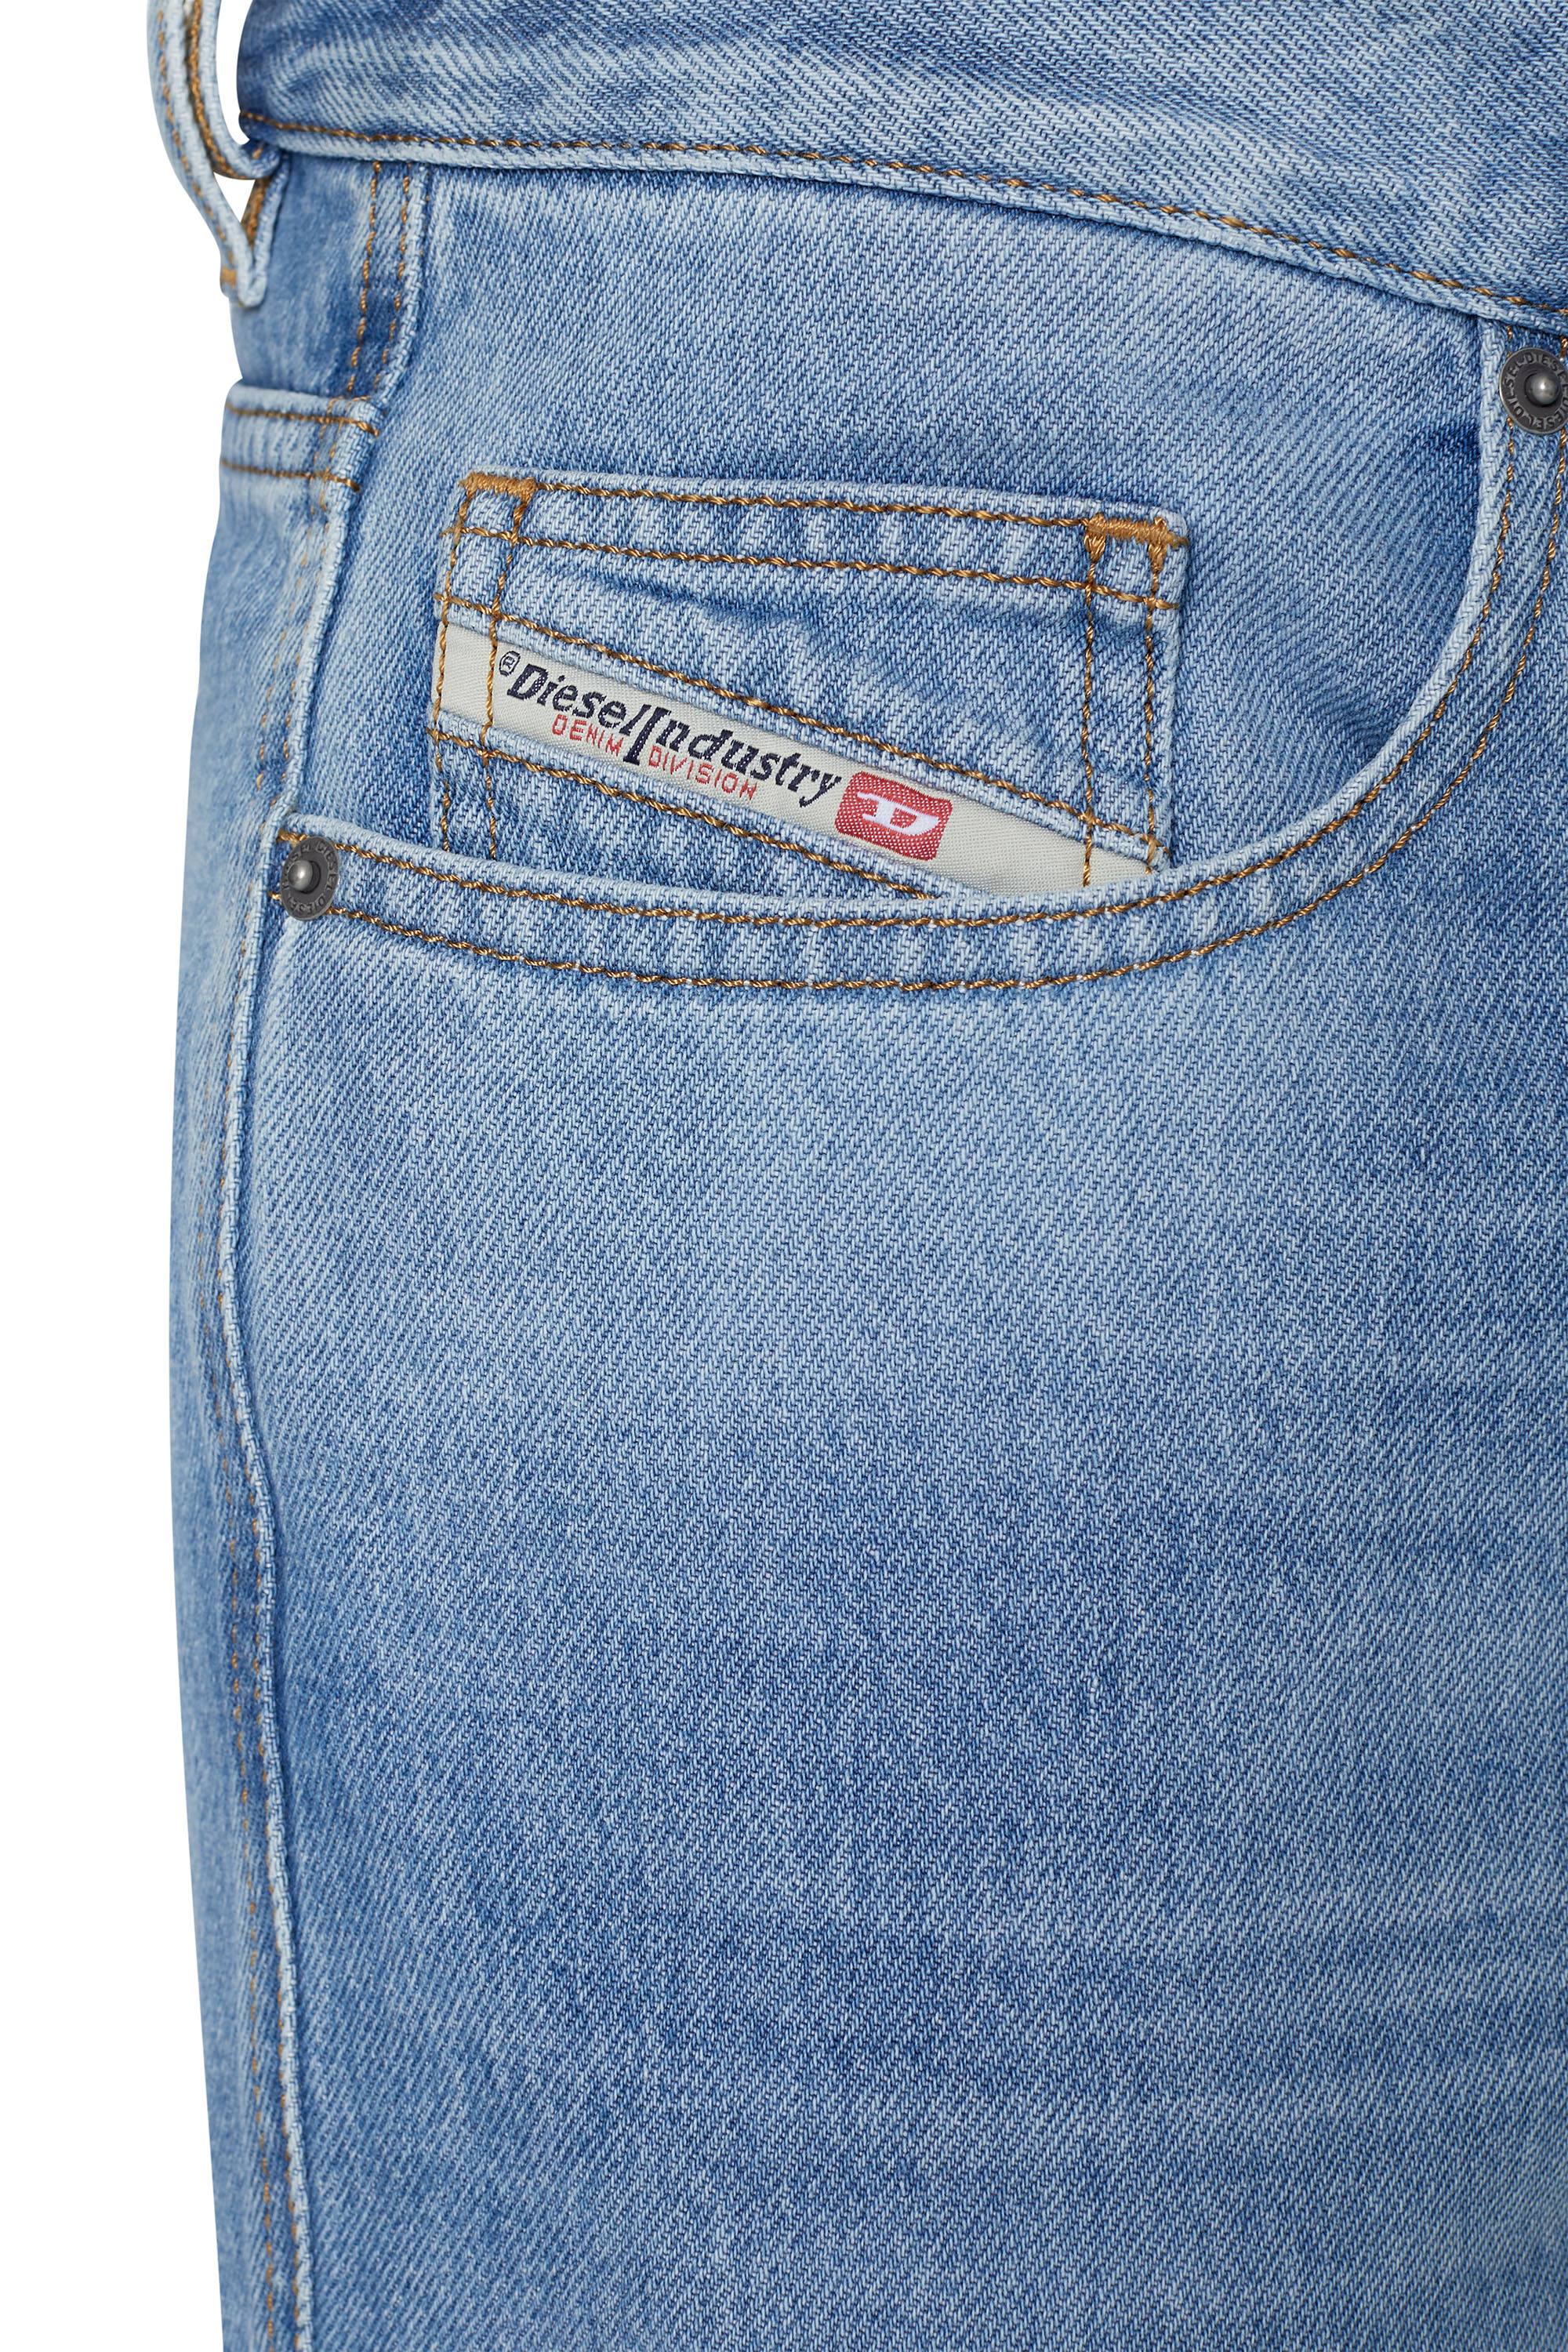 label forgiven Make way Men's Jeans: Skinny, Slim, Straight, Bootcut | Diesel